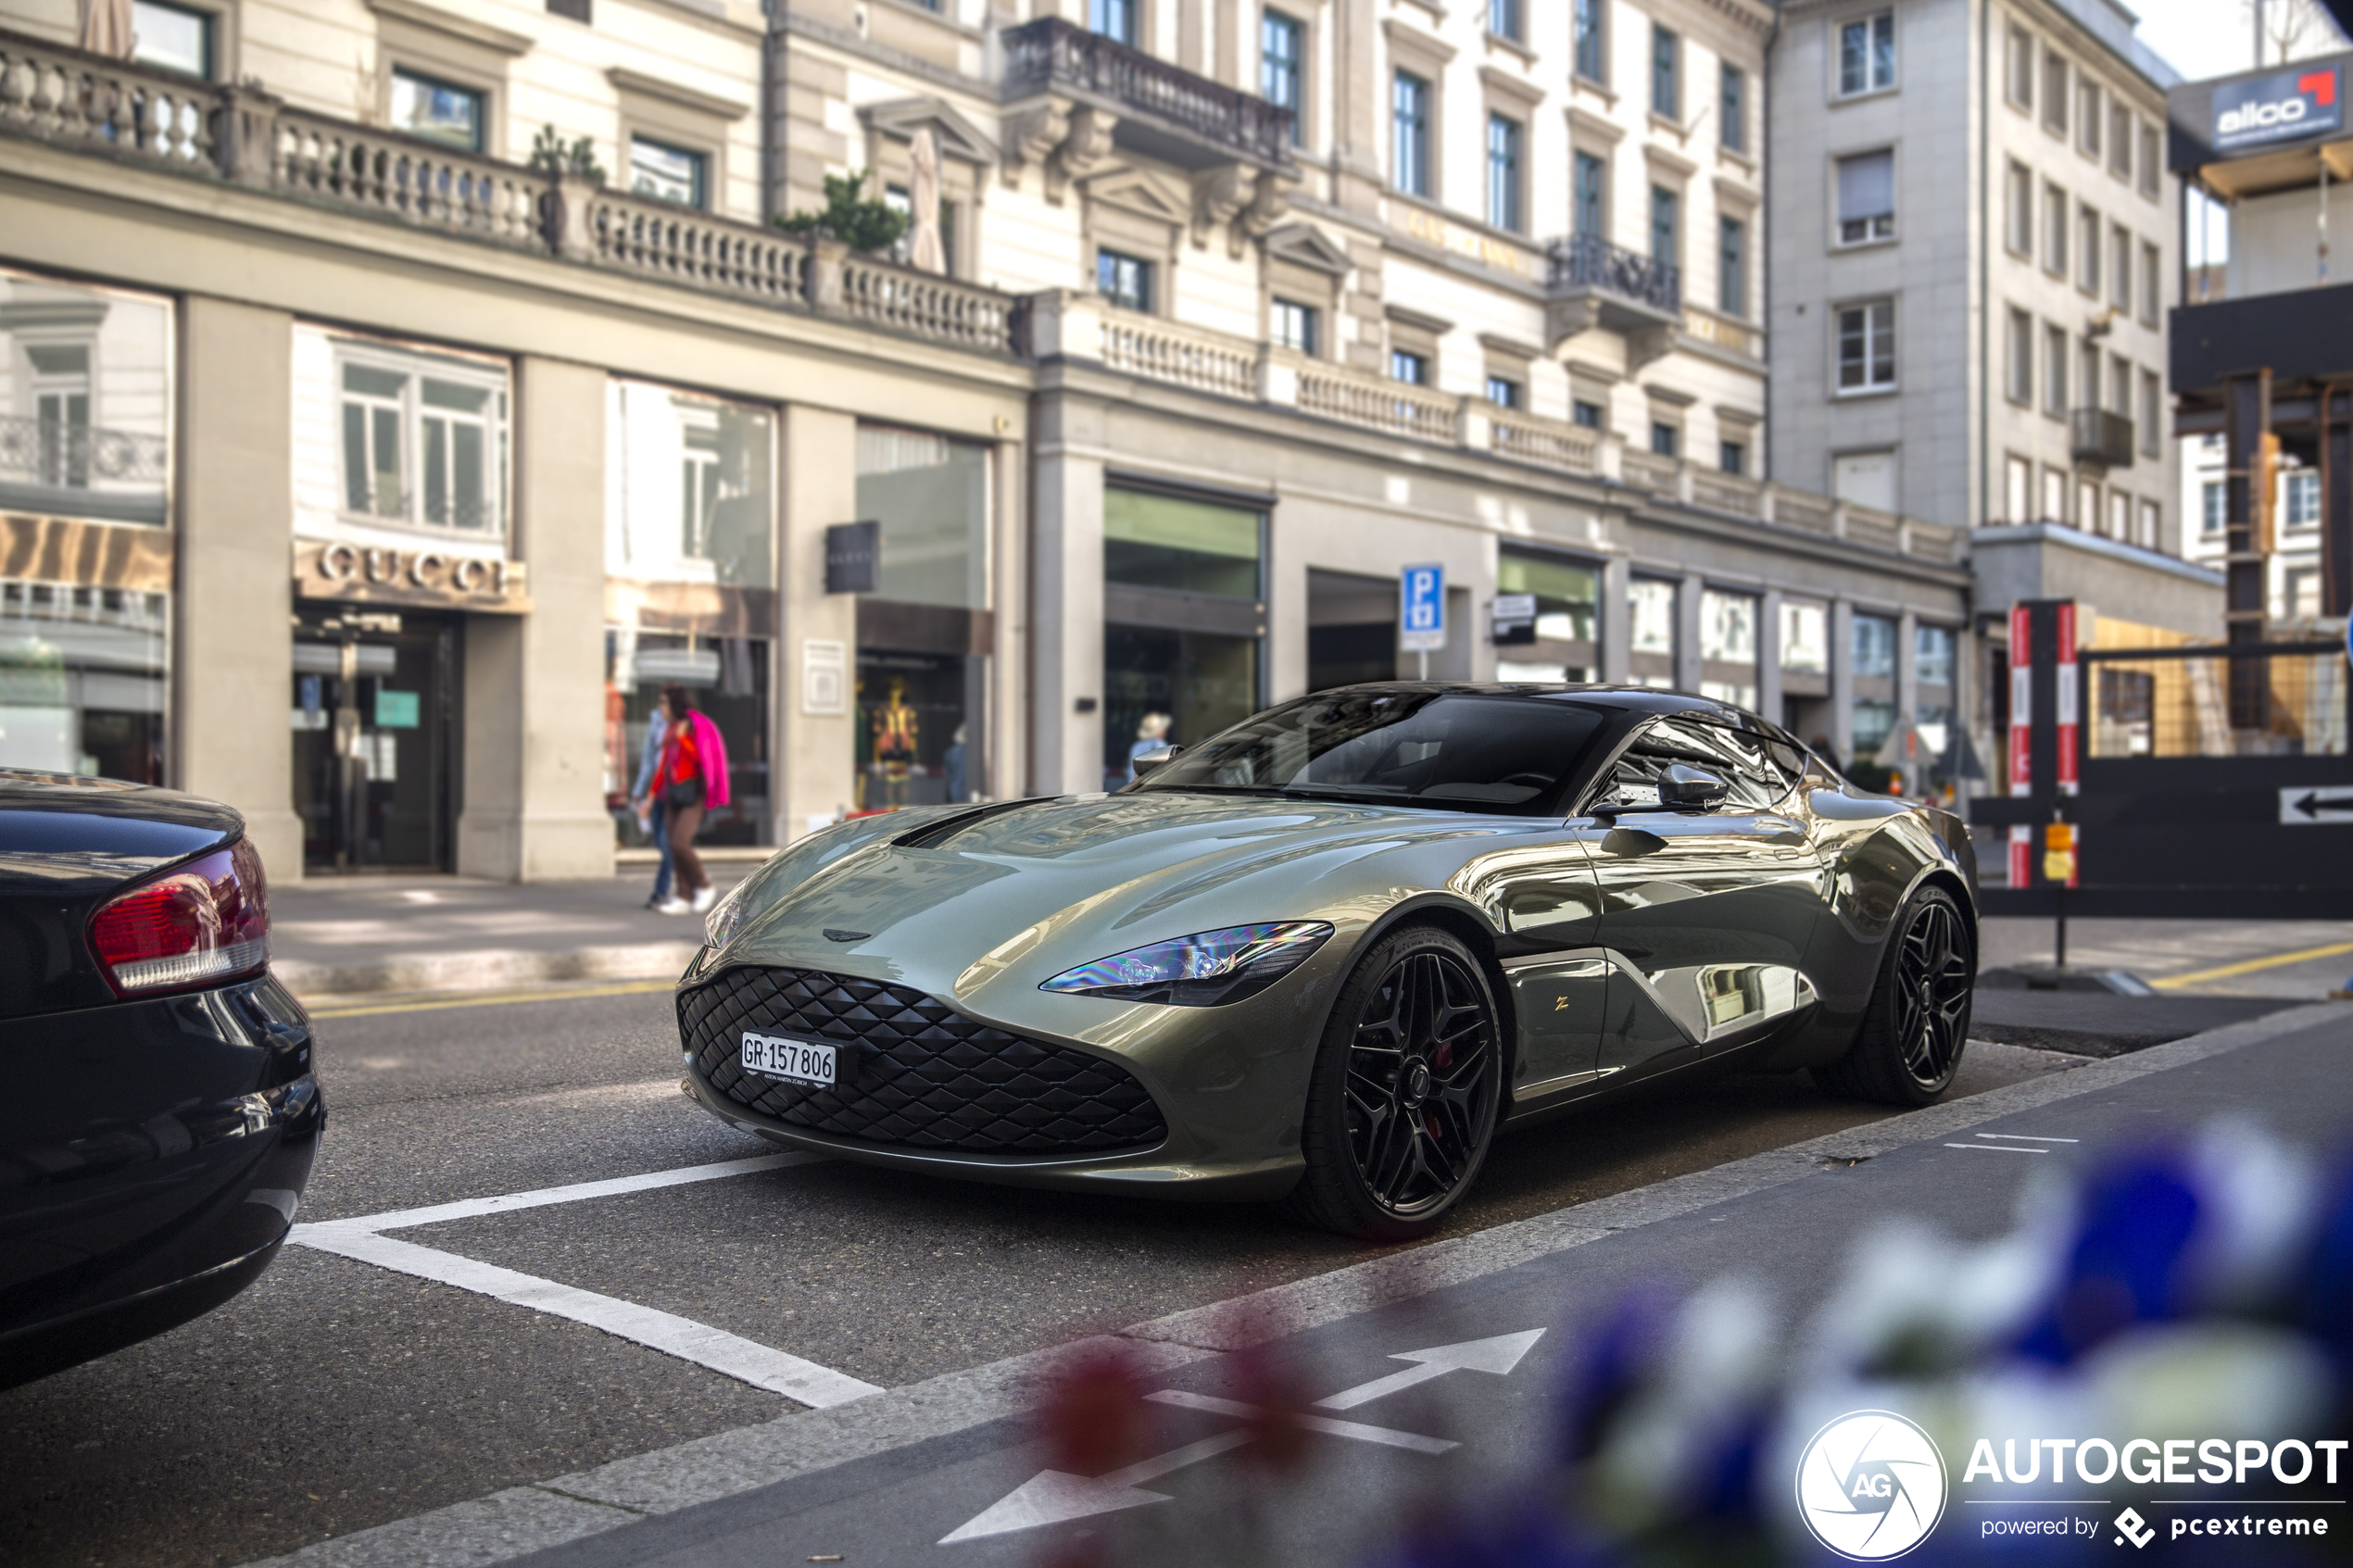 Aston Martin DBS GT Zagato valt echt op op straat